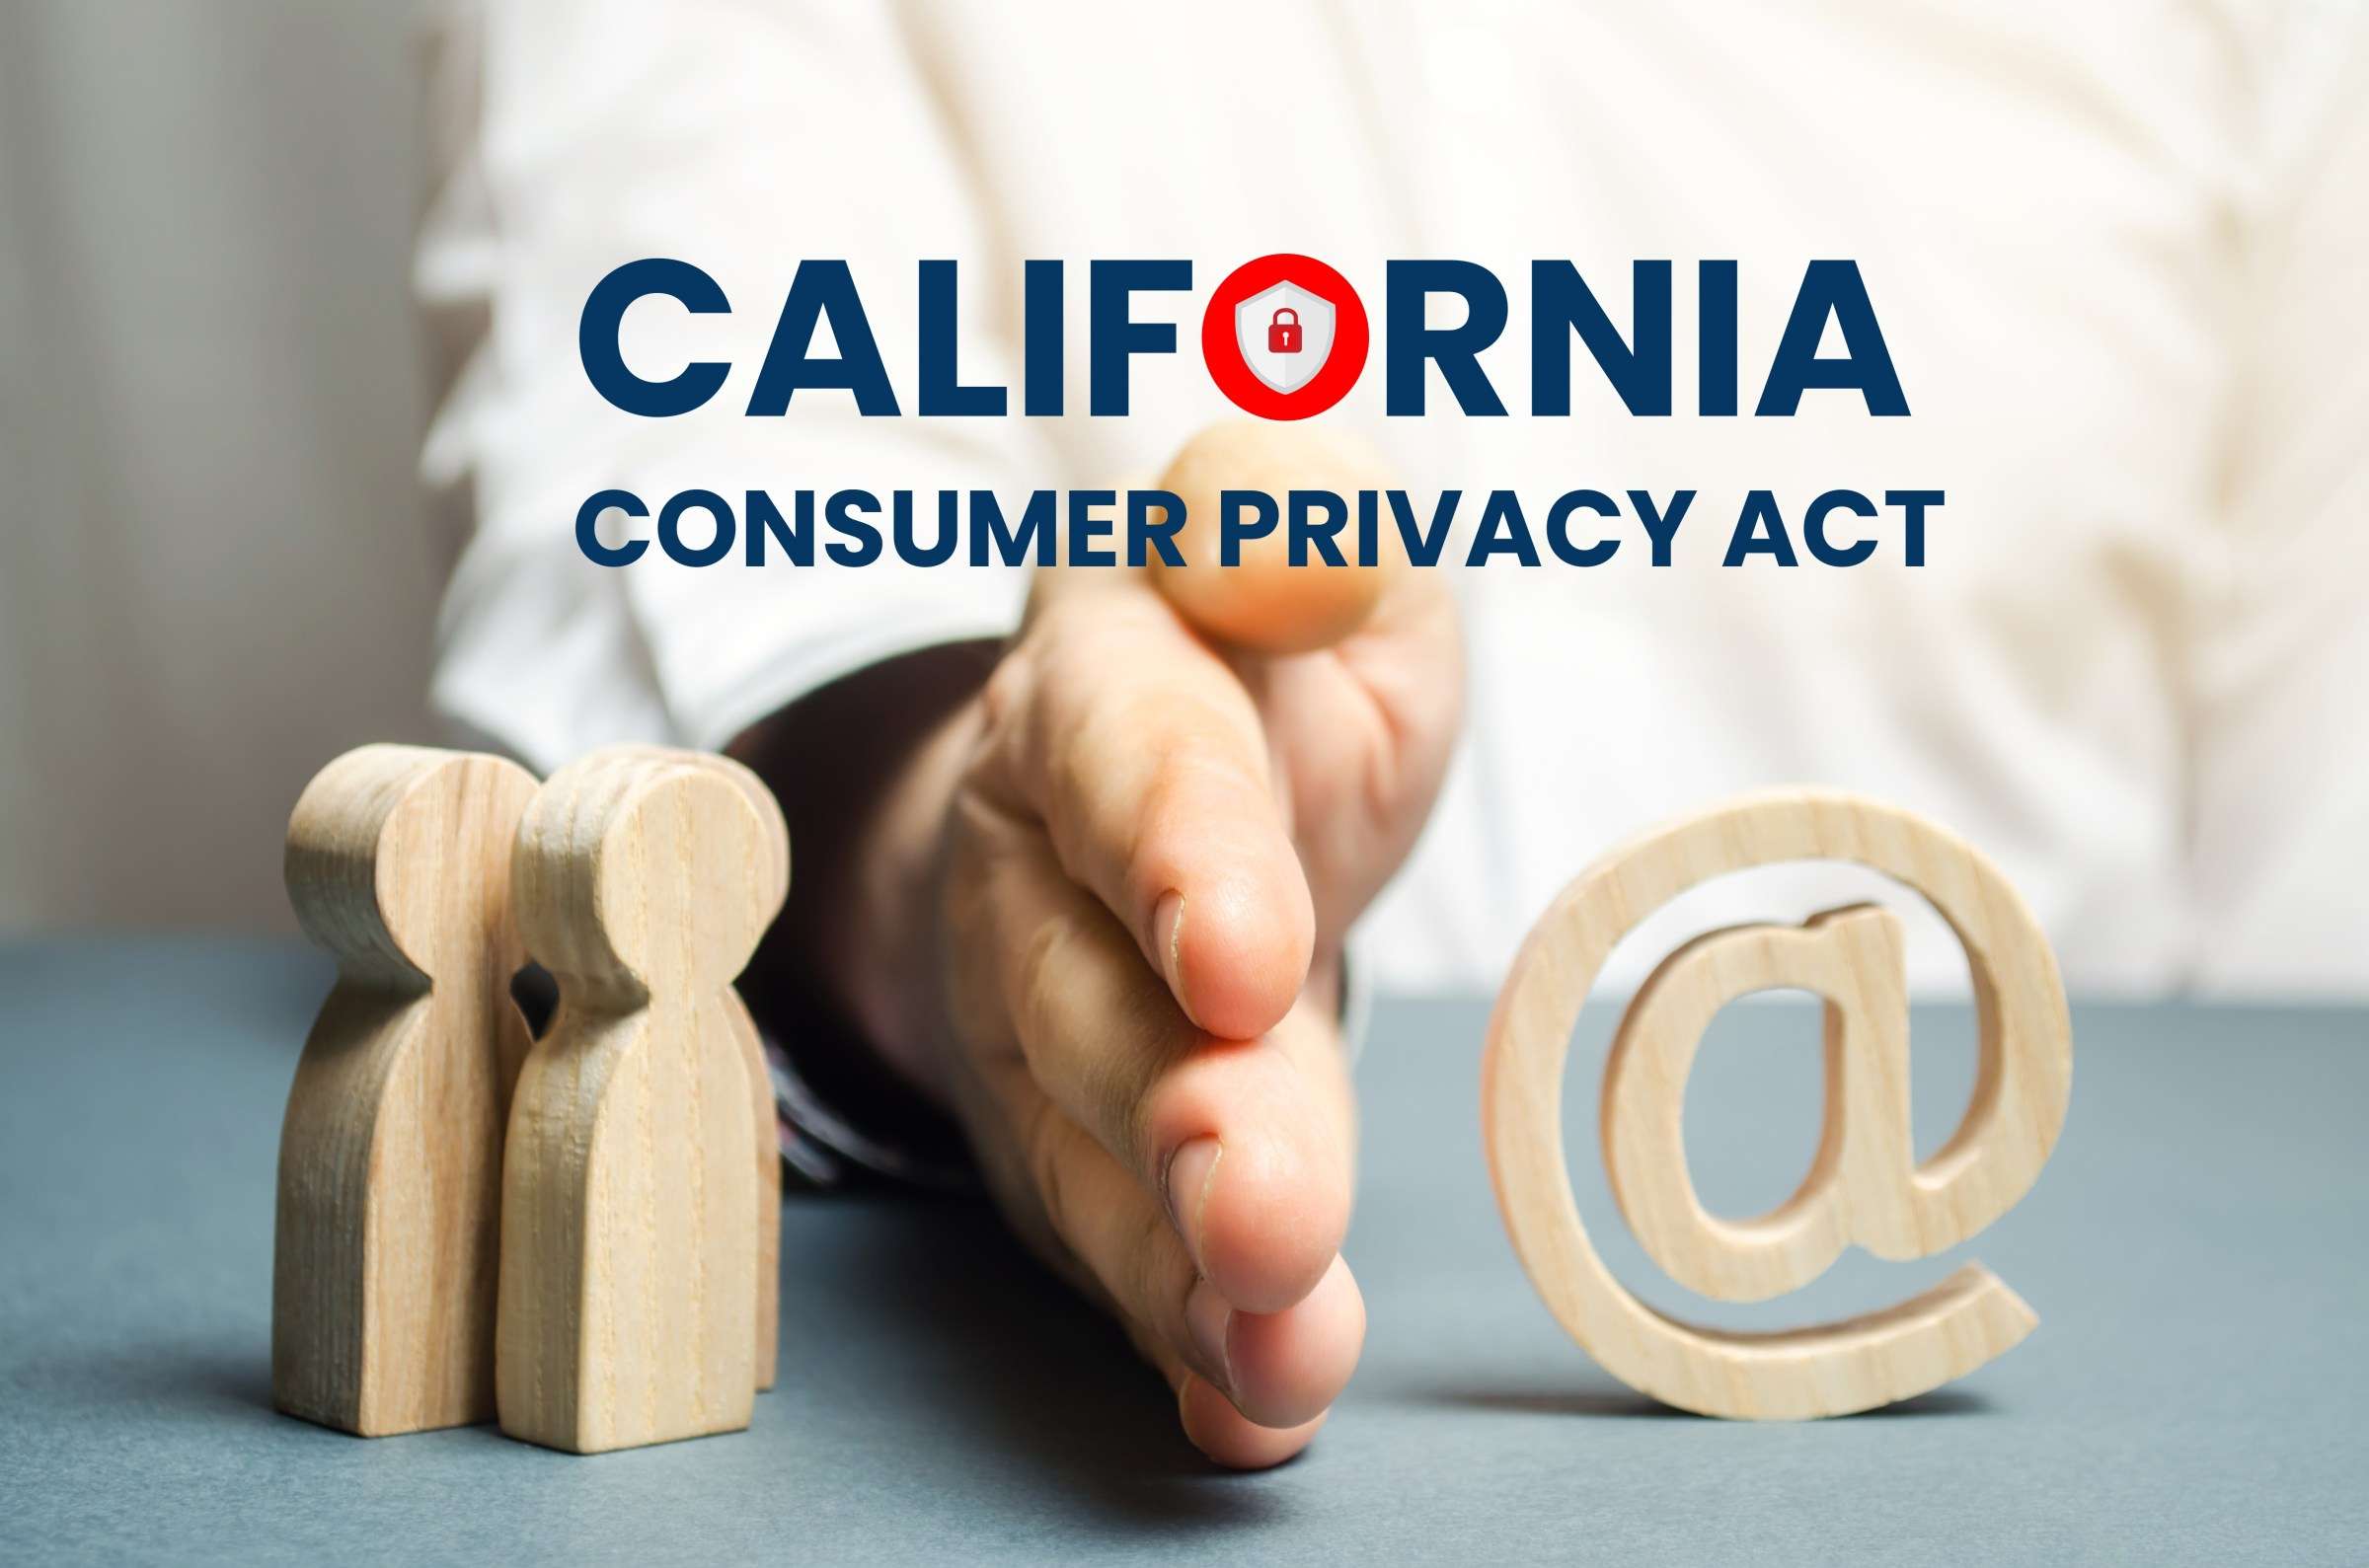 Who should prepare for the California Consumer Privacy Act?